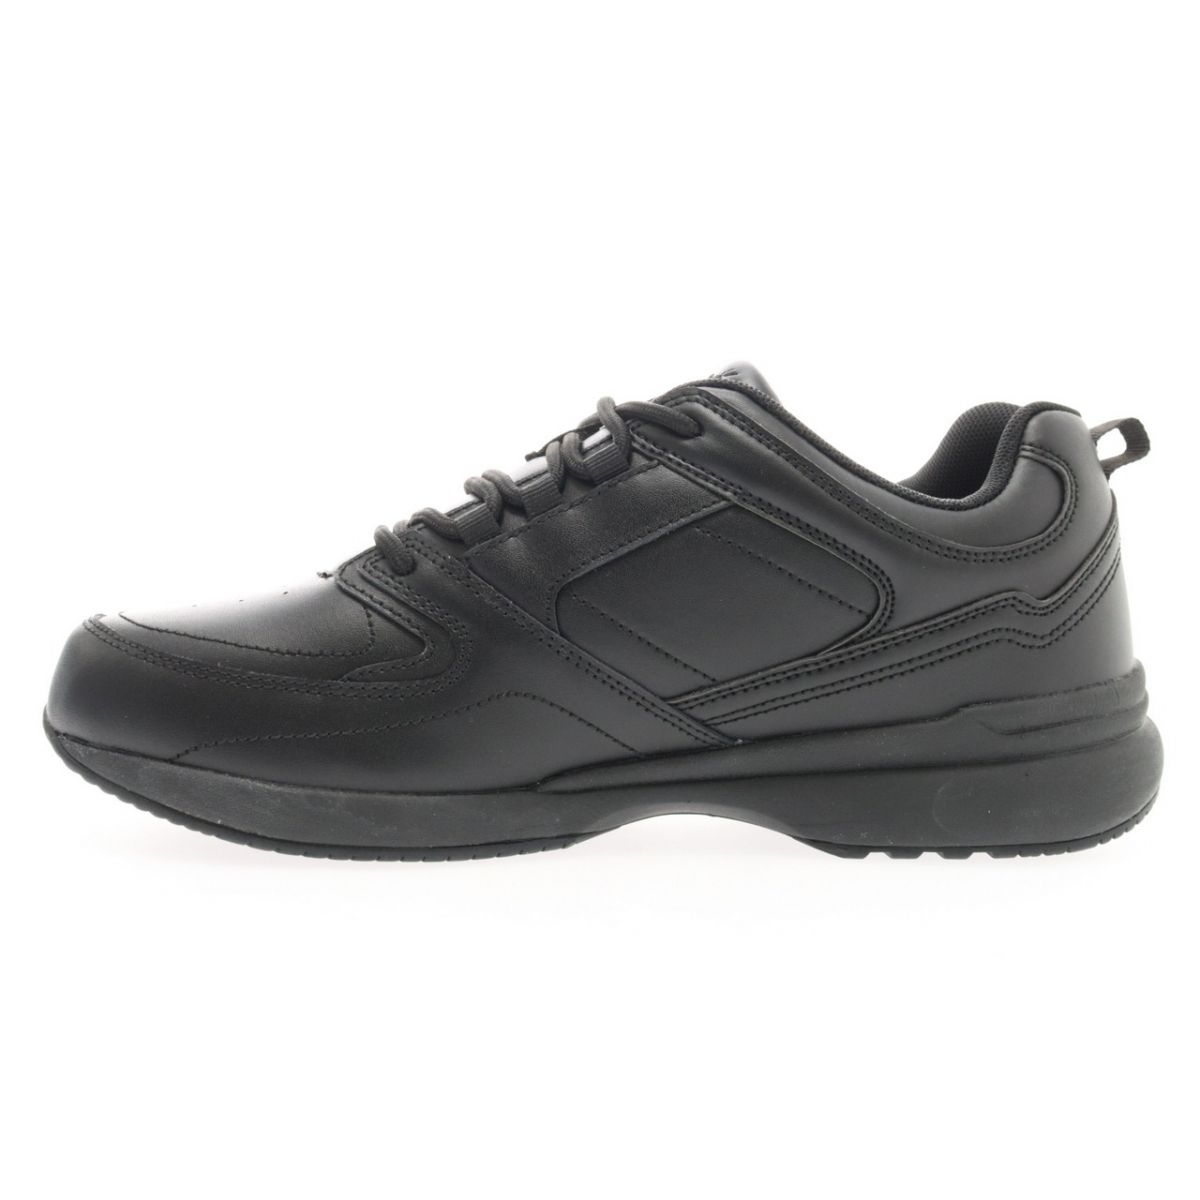 Propet Men's Life Walker Sport Sneaker Black - MAA272LBLK BLACK - BLACK, 14 WIDE